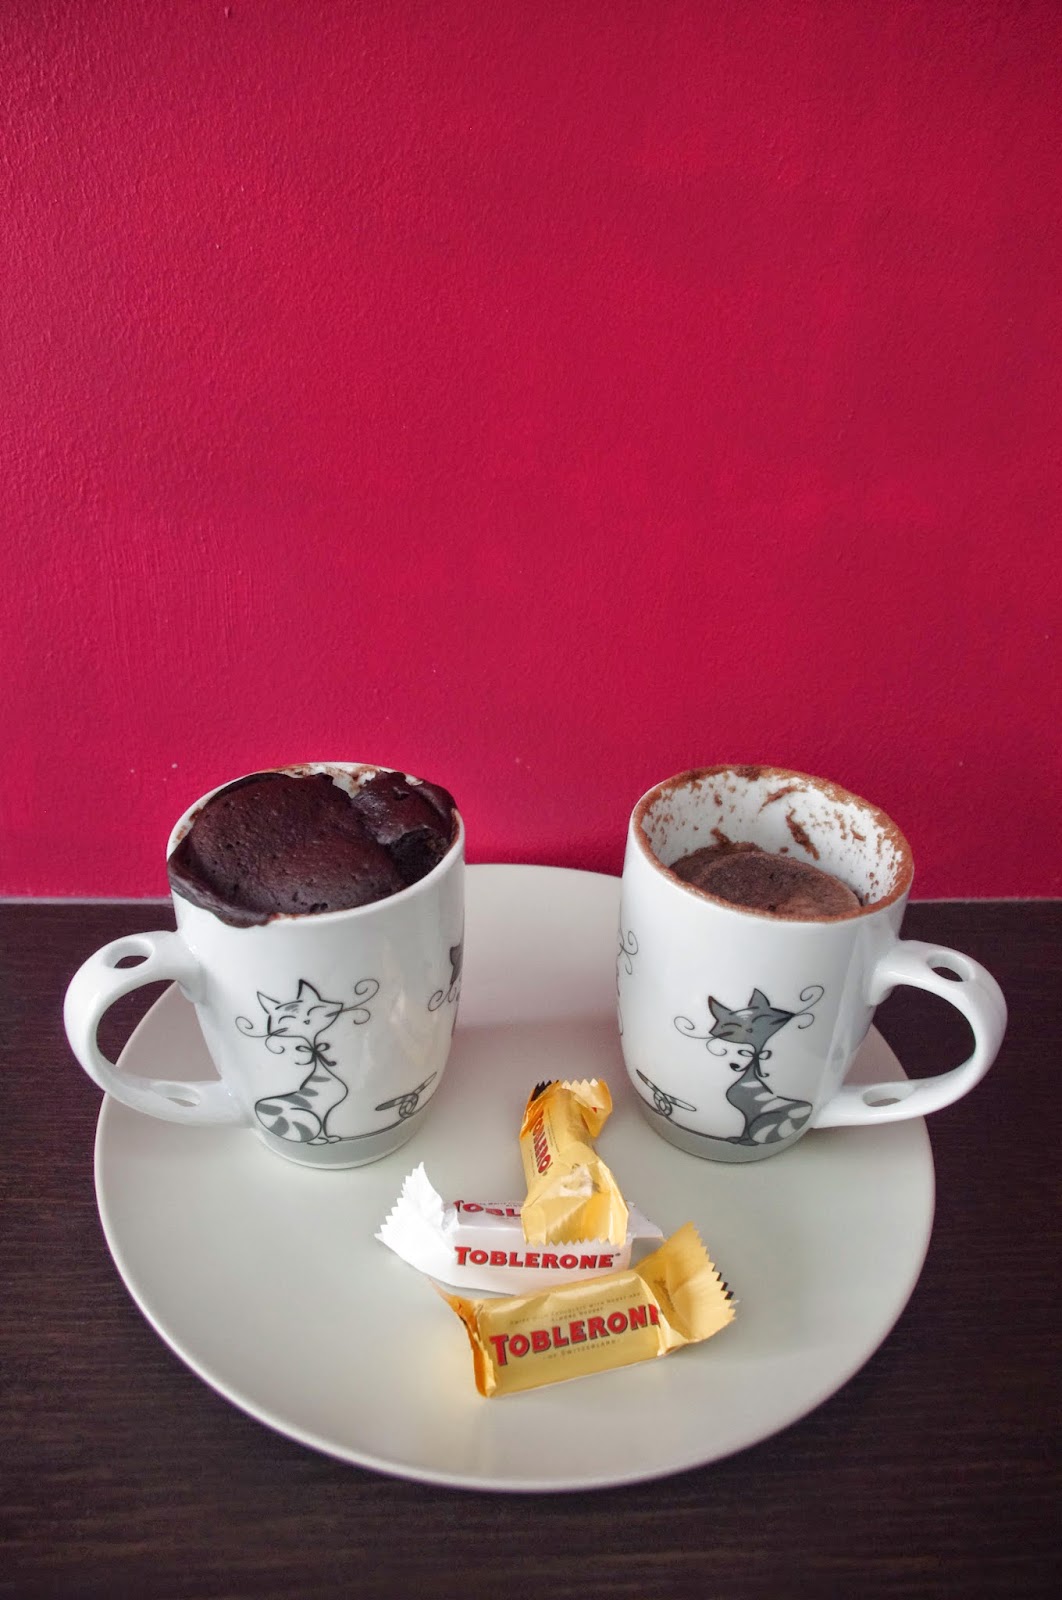 Folle De Cuisine Test Mug Cake Chocolat Et Toblerone Sans